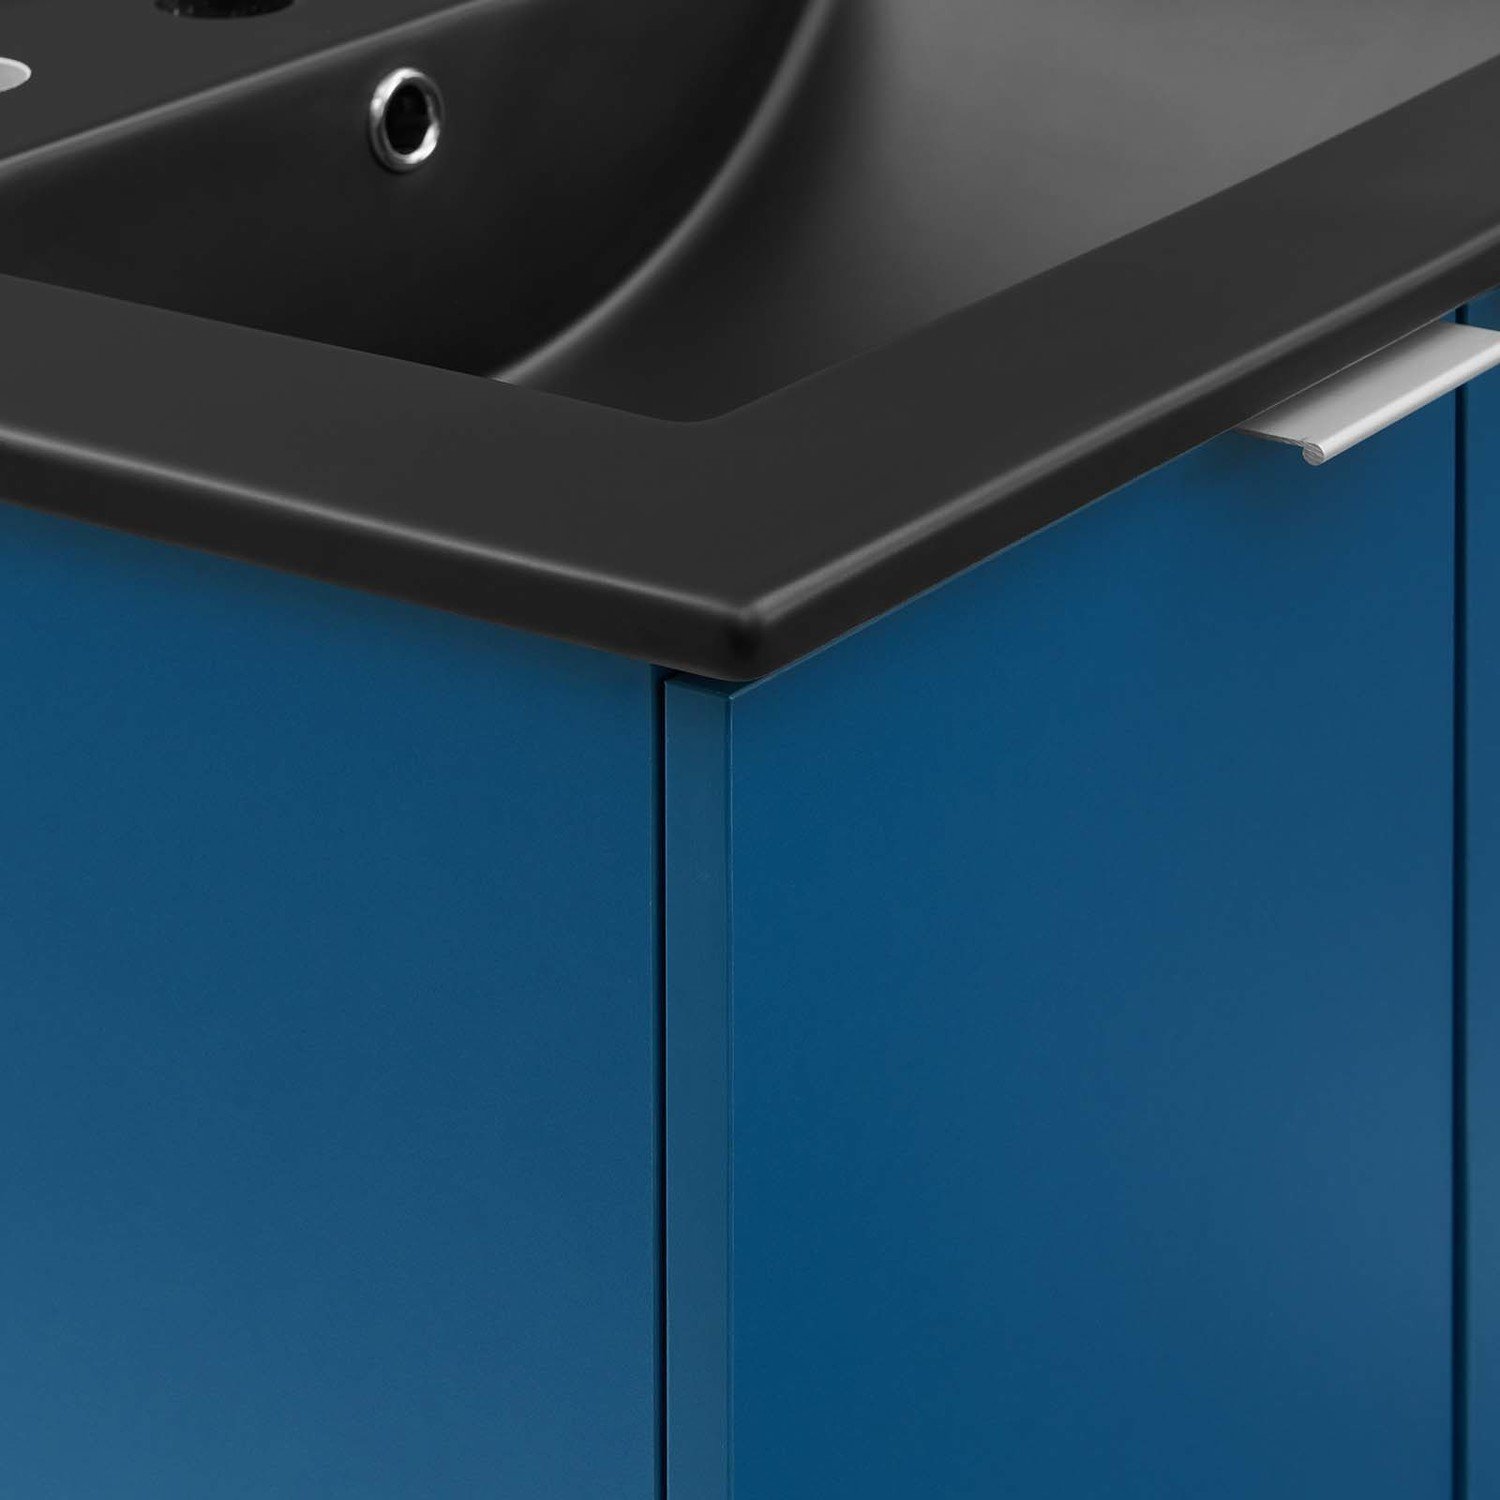 2 vanity bathroom ideas Modway Furniture Vanities Navy Black